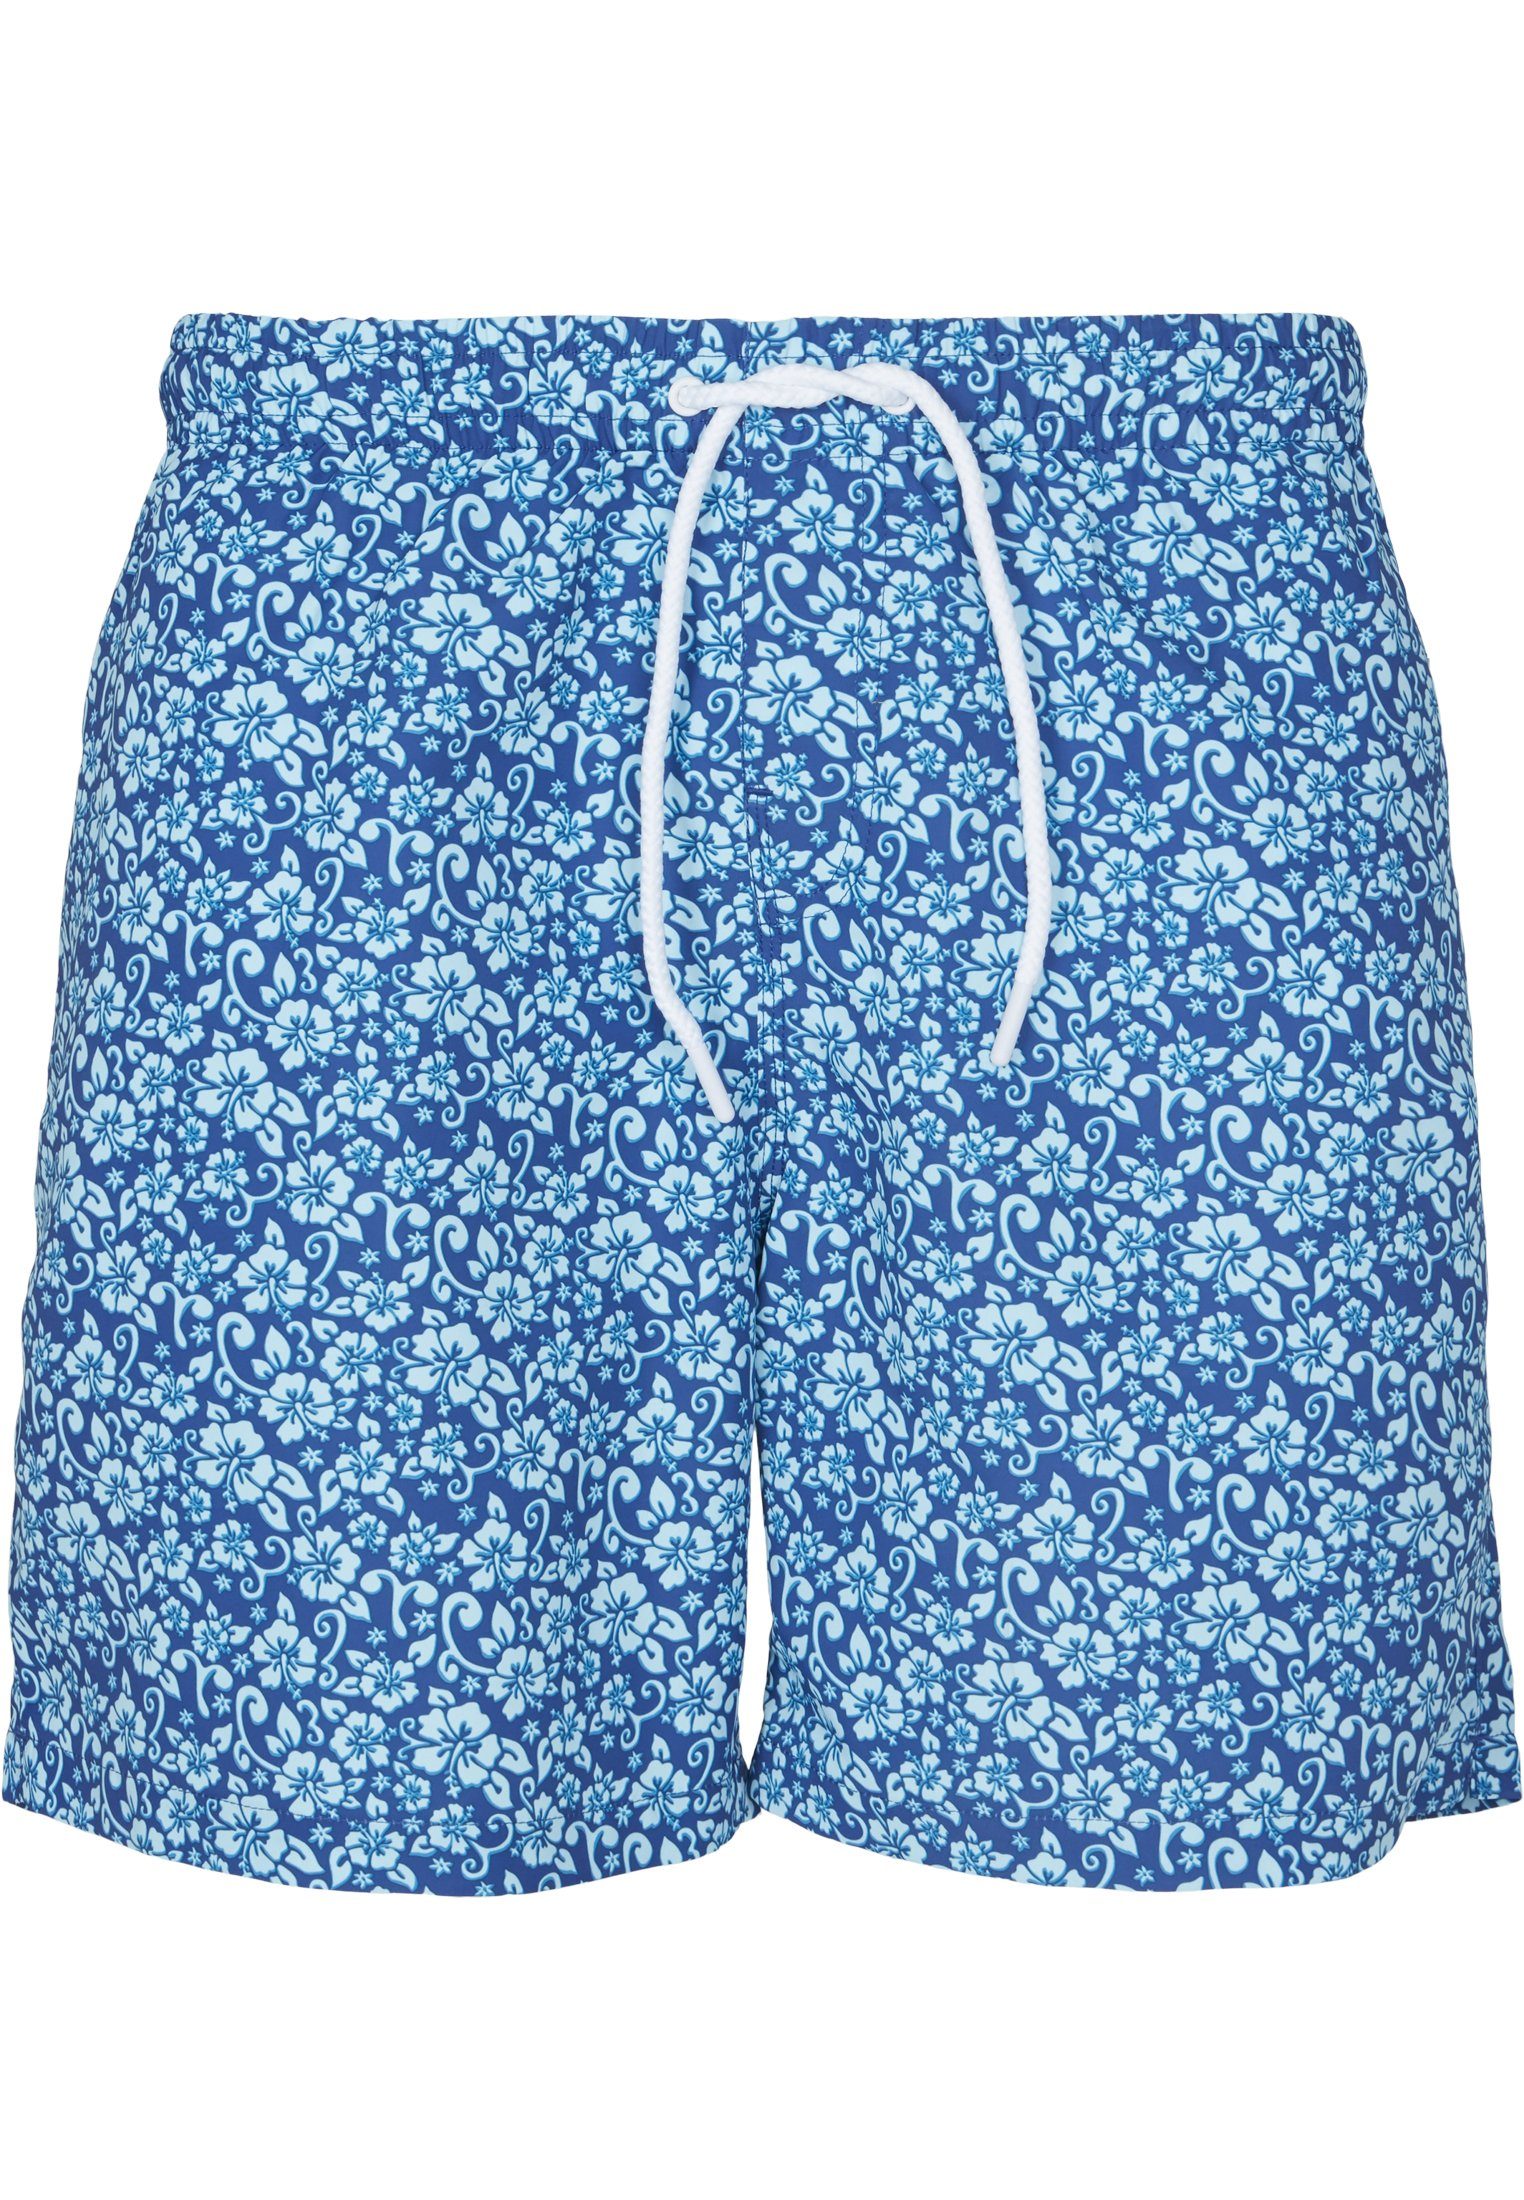 URBAN CLASSICS Floral Shorts navy Swim Herren Badeshorts